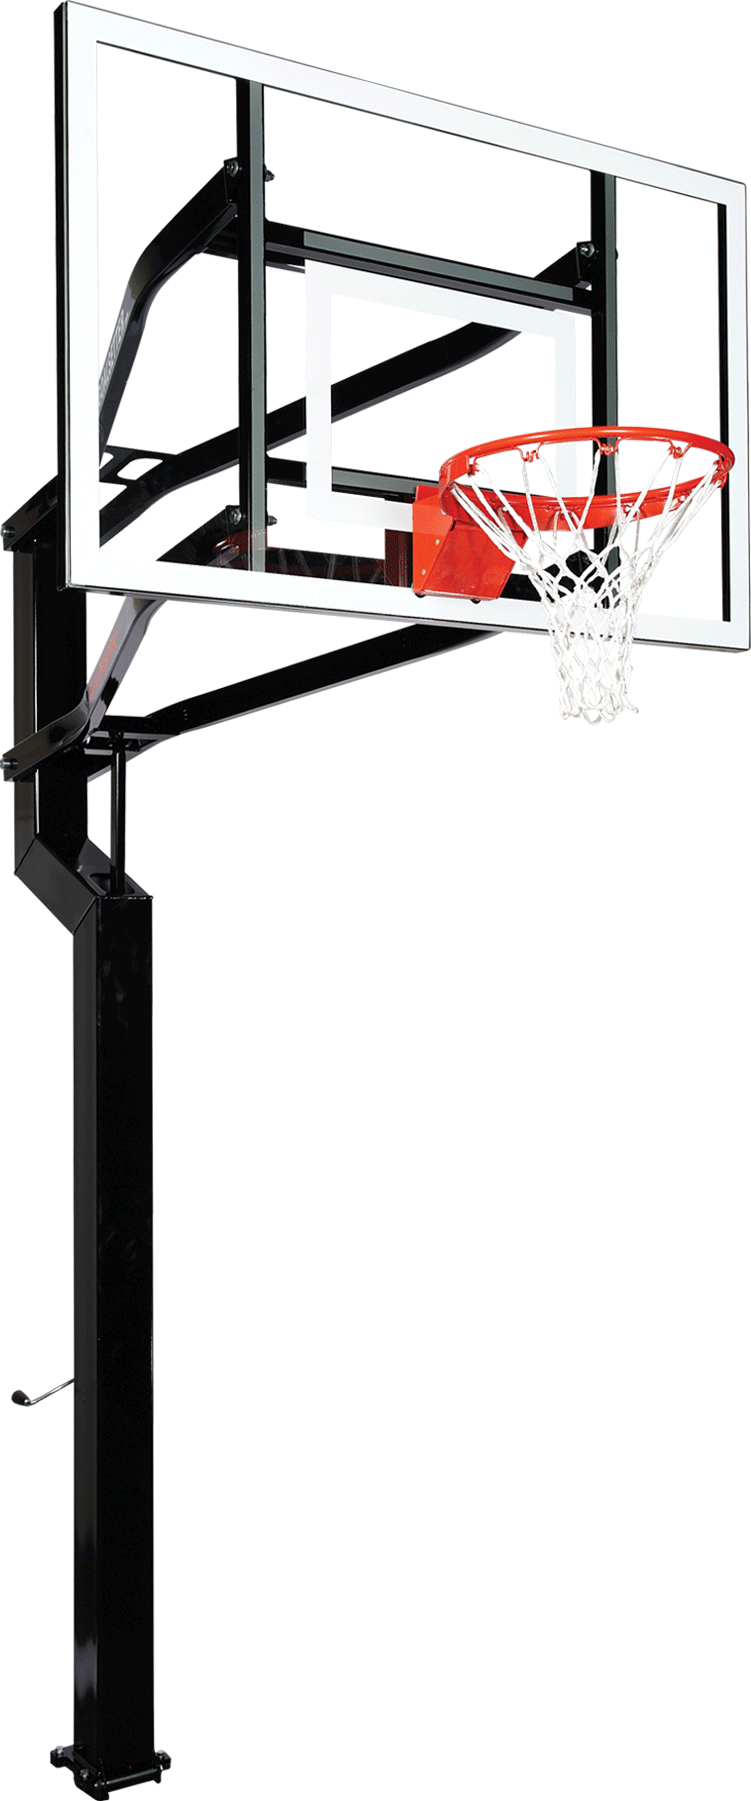 Basketball gets playful upgrade thanks to smart backboard